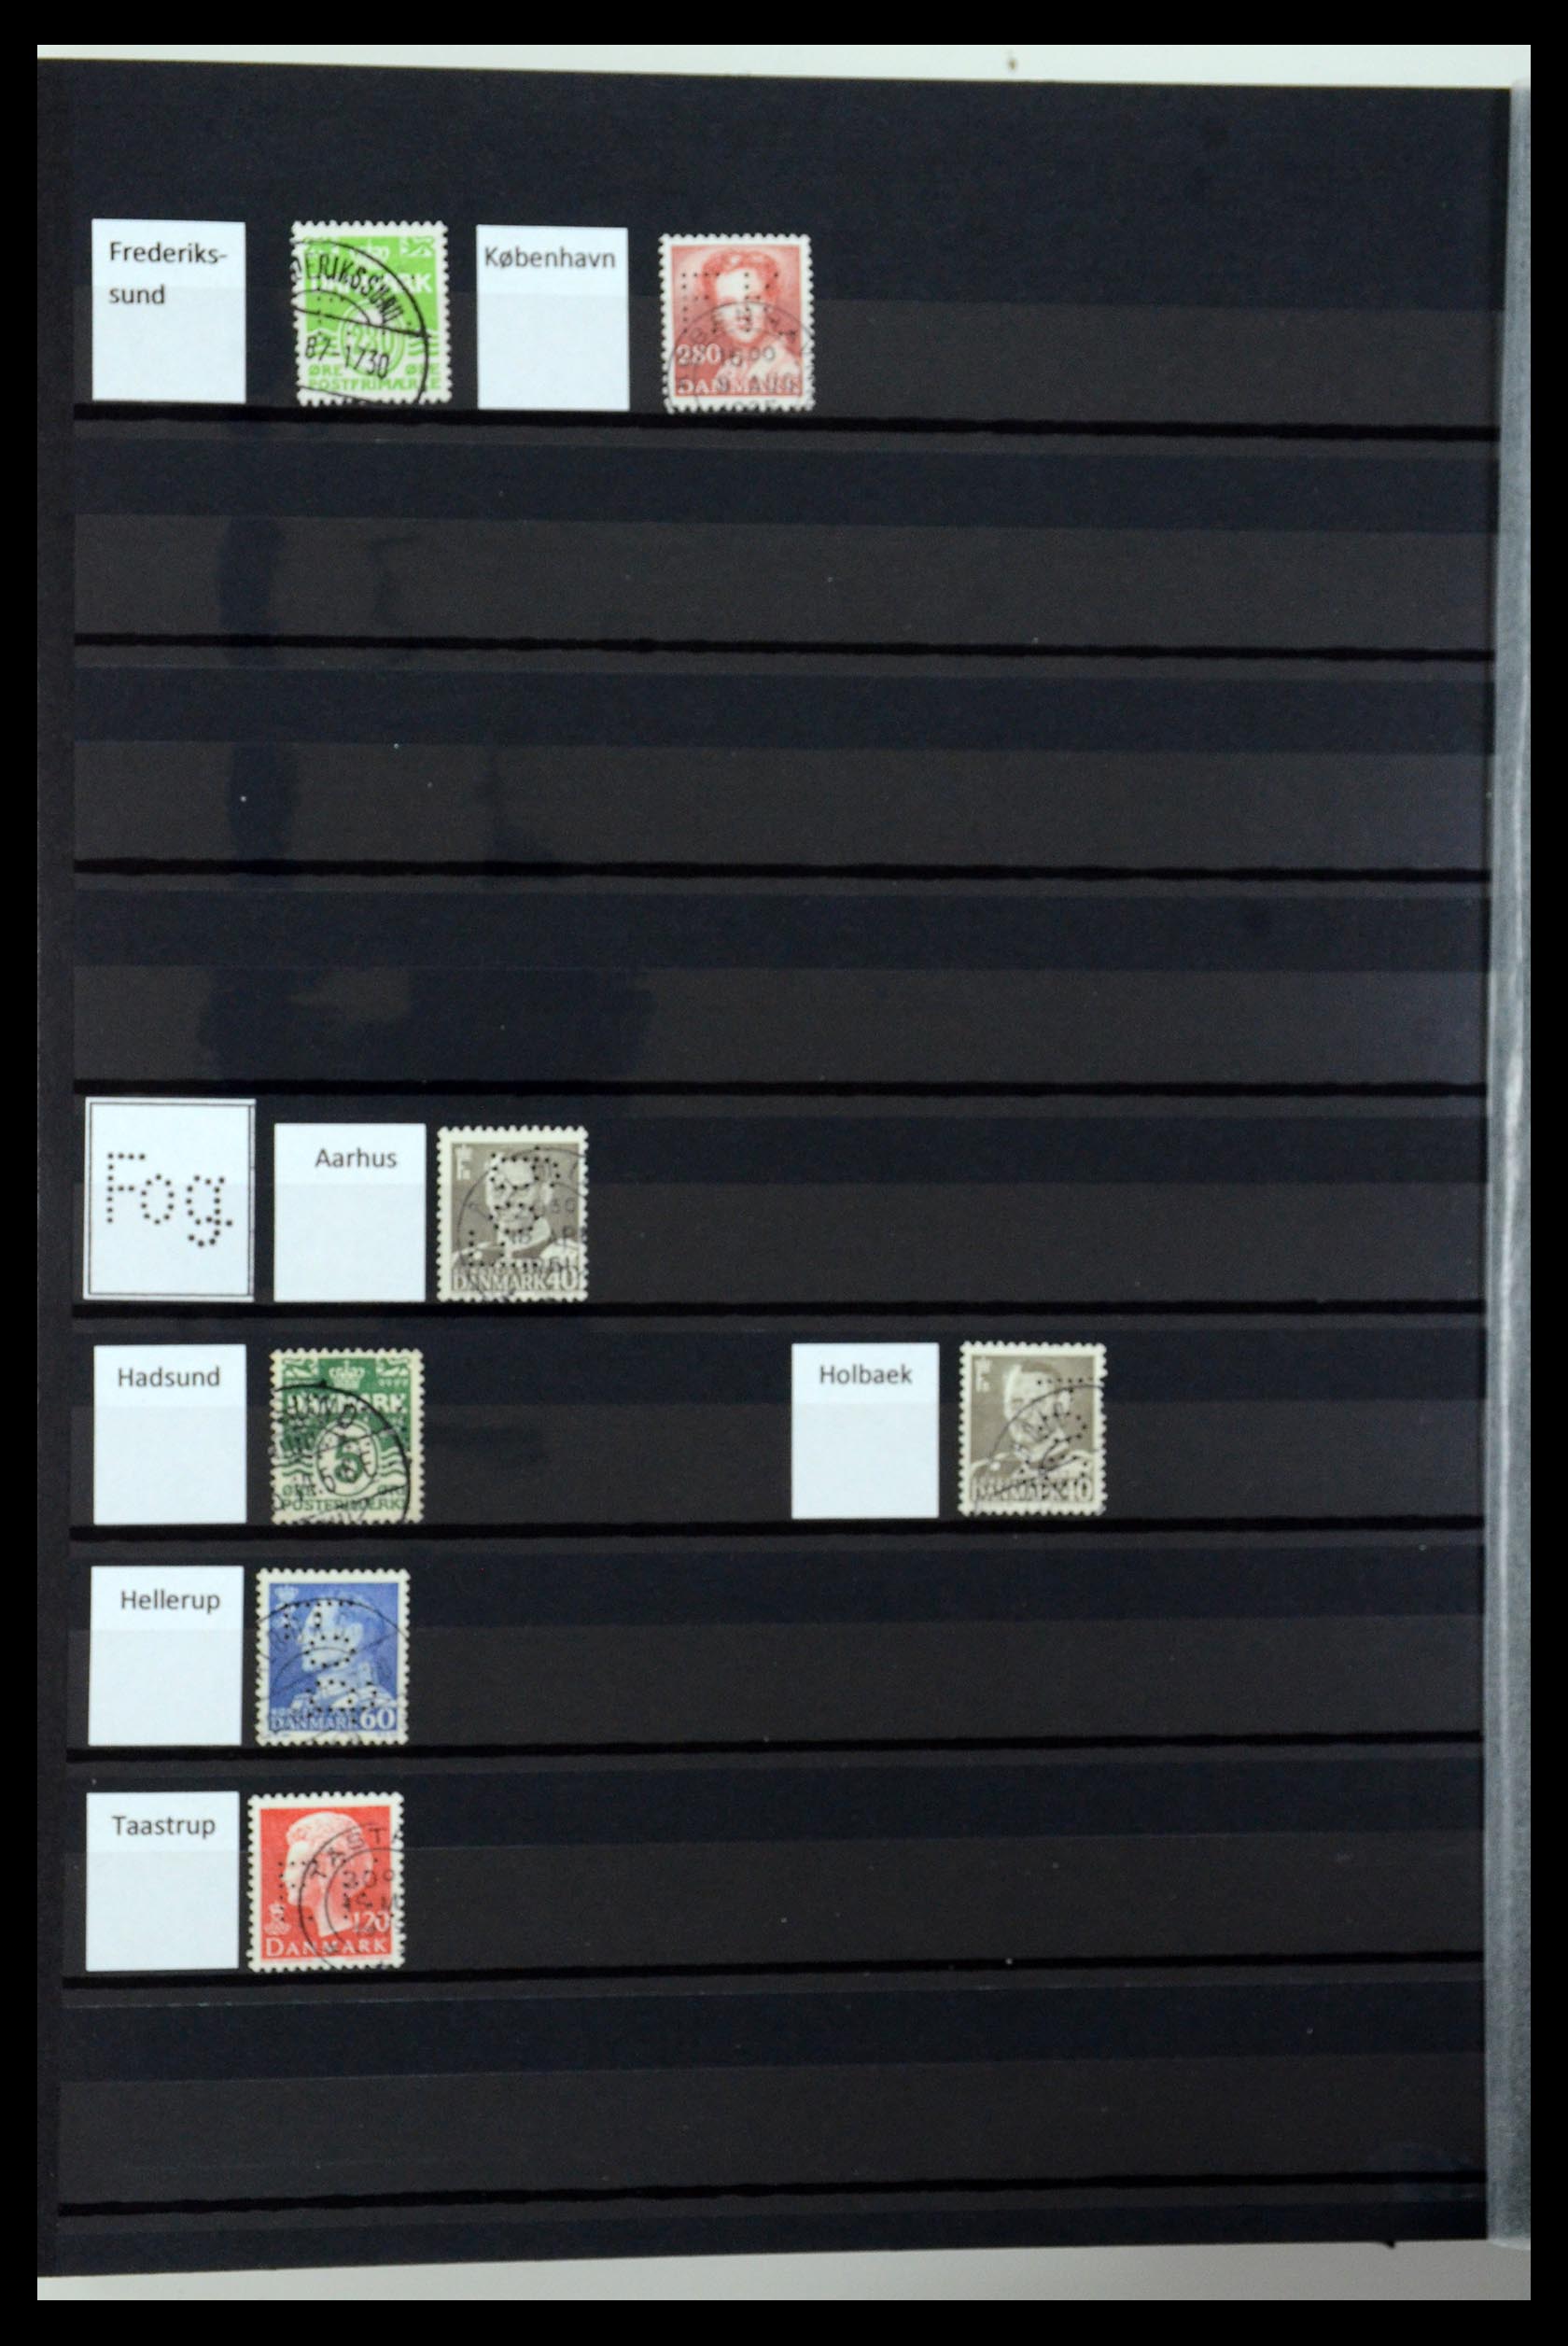 36396 076 - Stamp collection 36396 Denmark perfins.